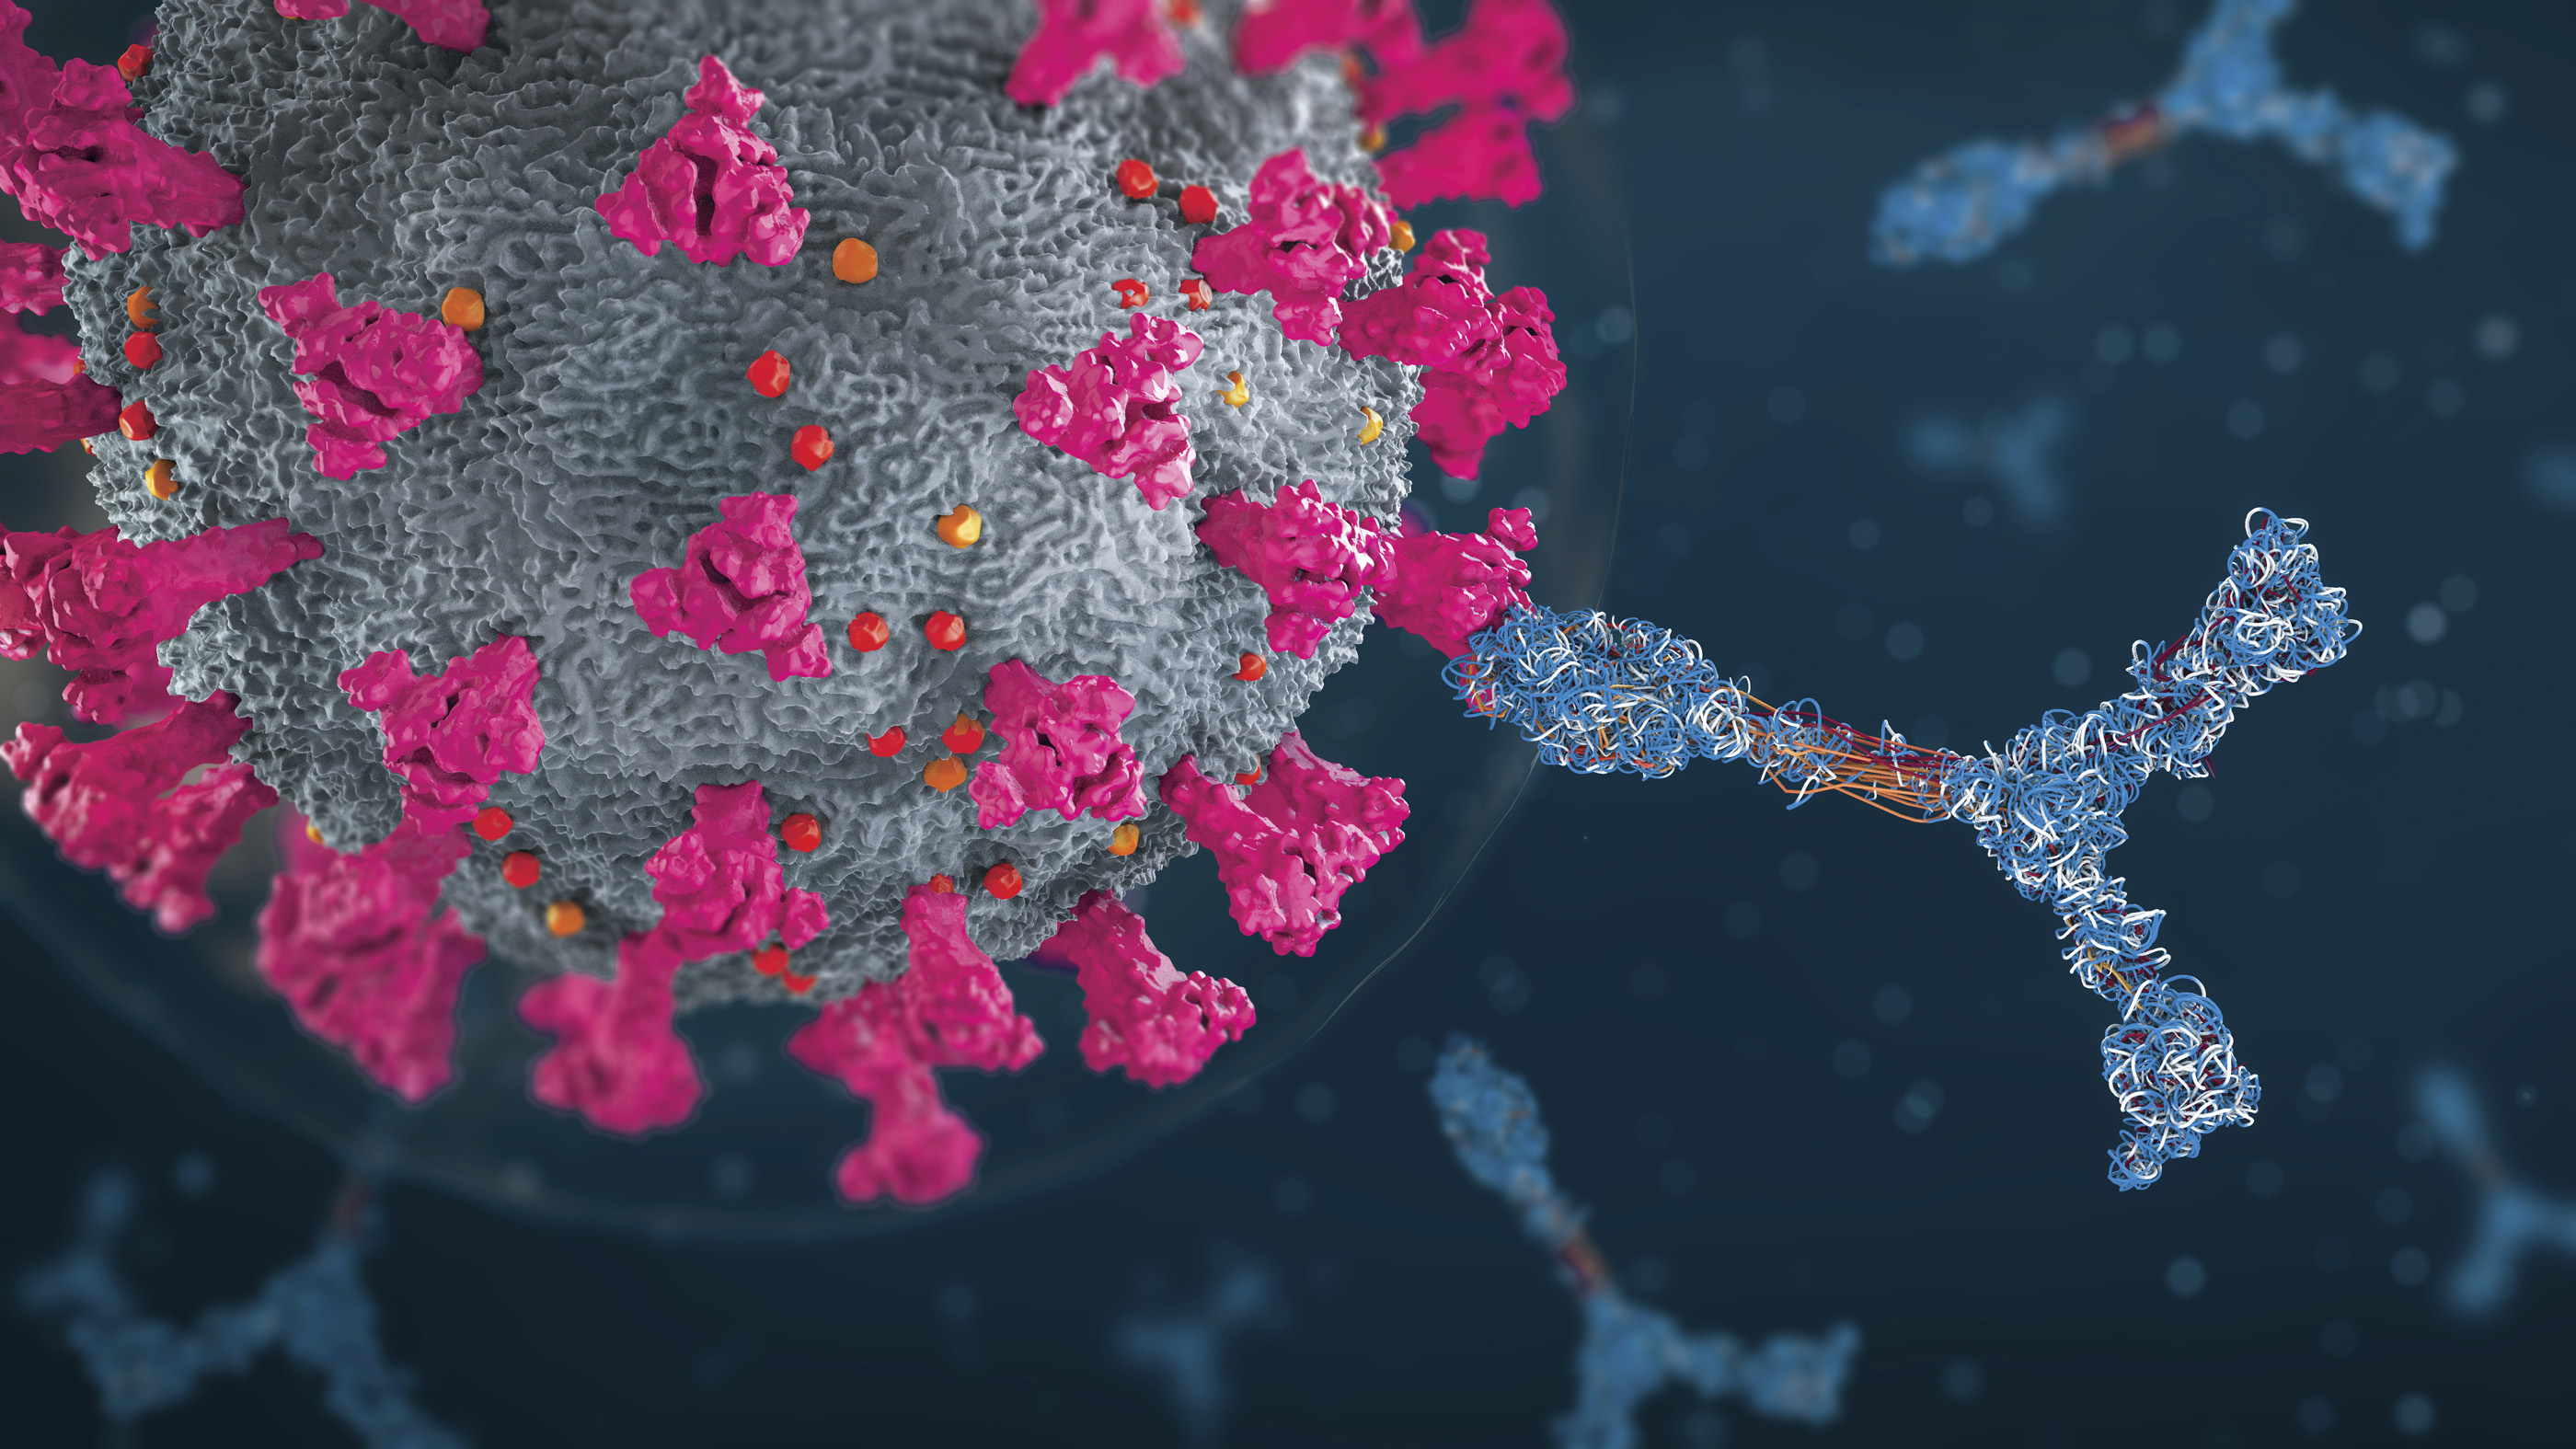 Antibodies attack a coronavirus particle in this illustration.